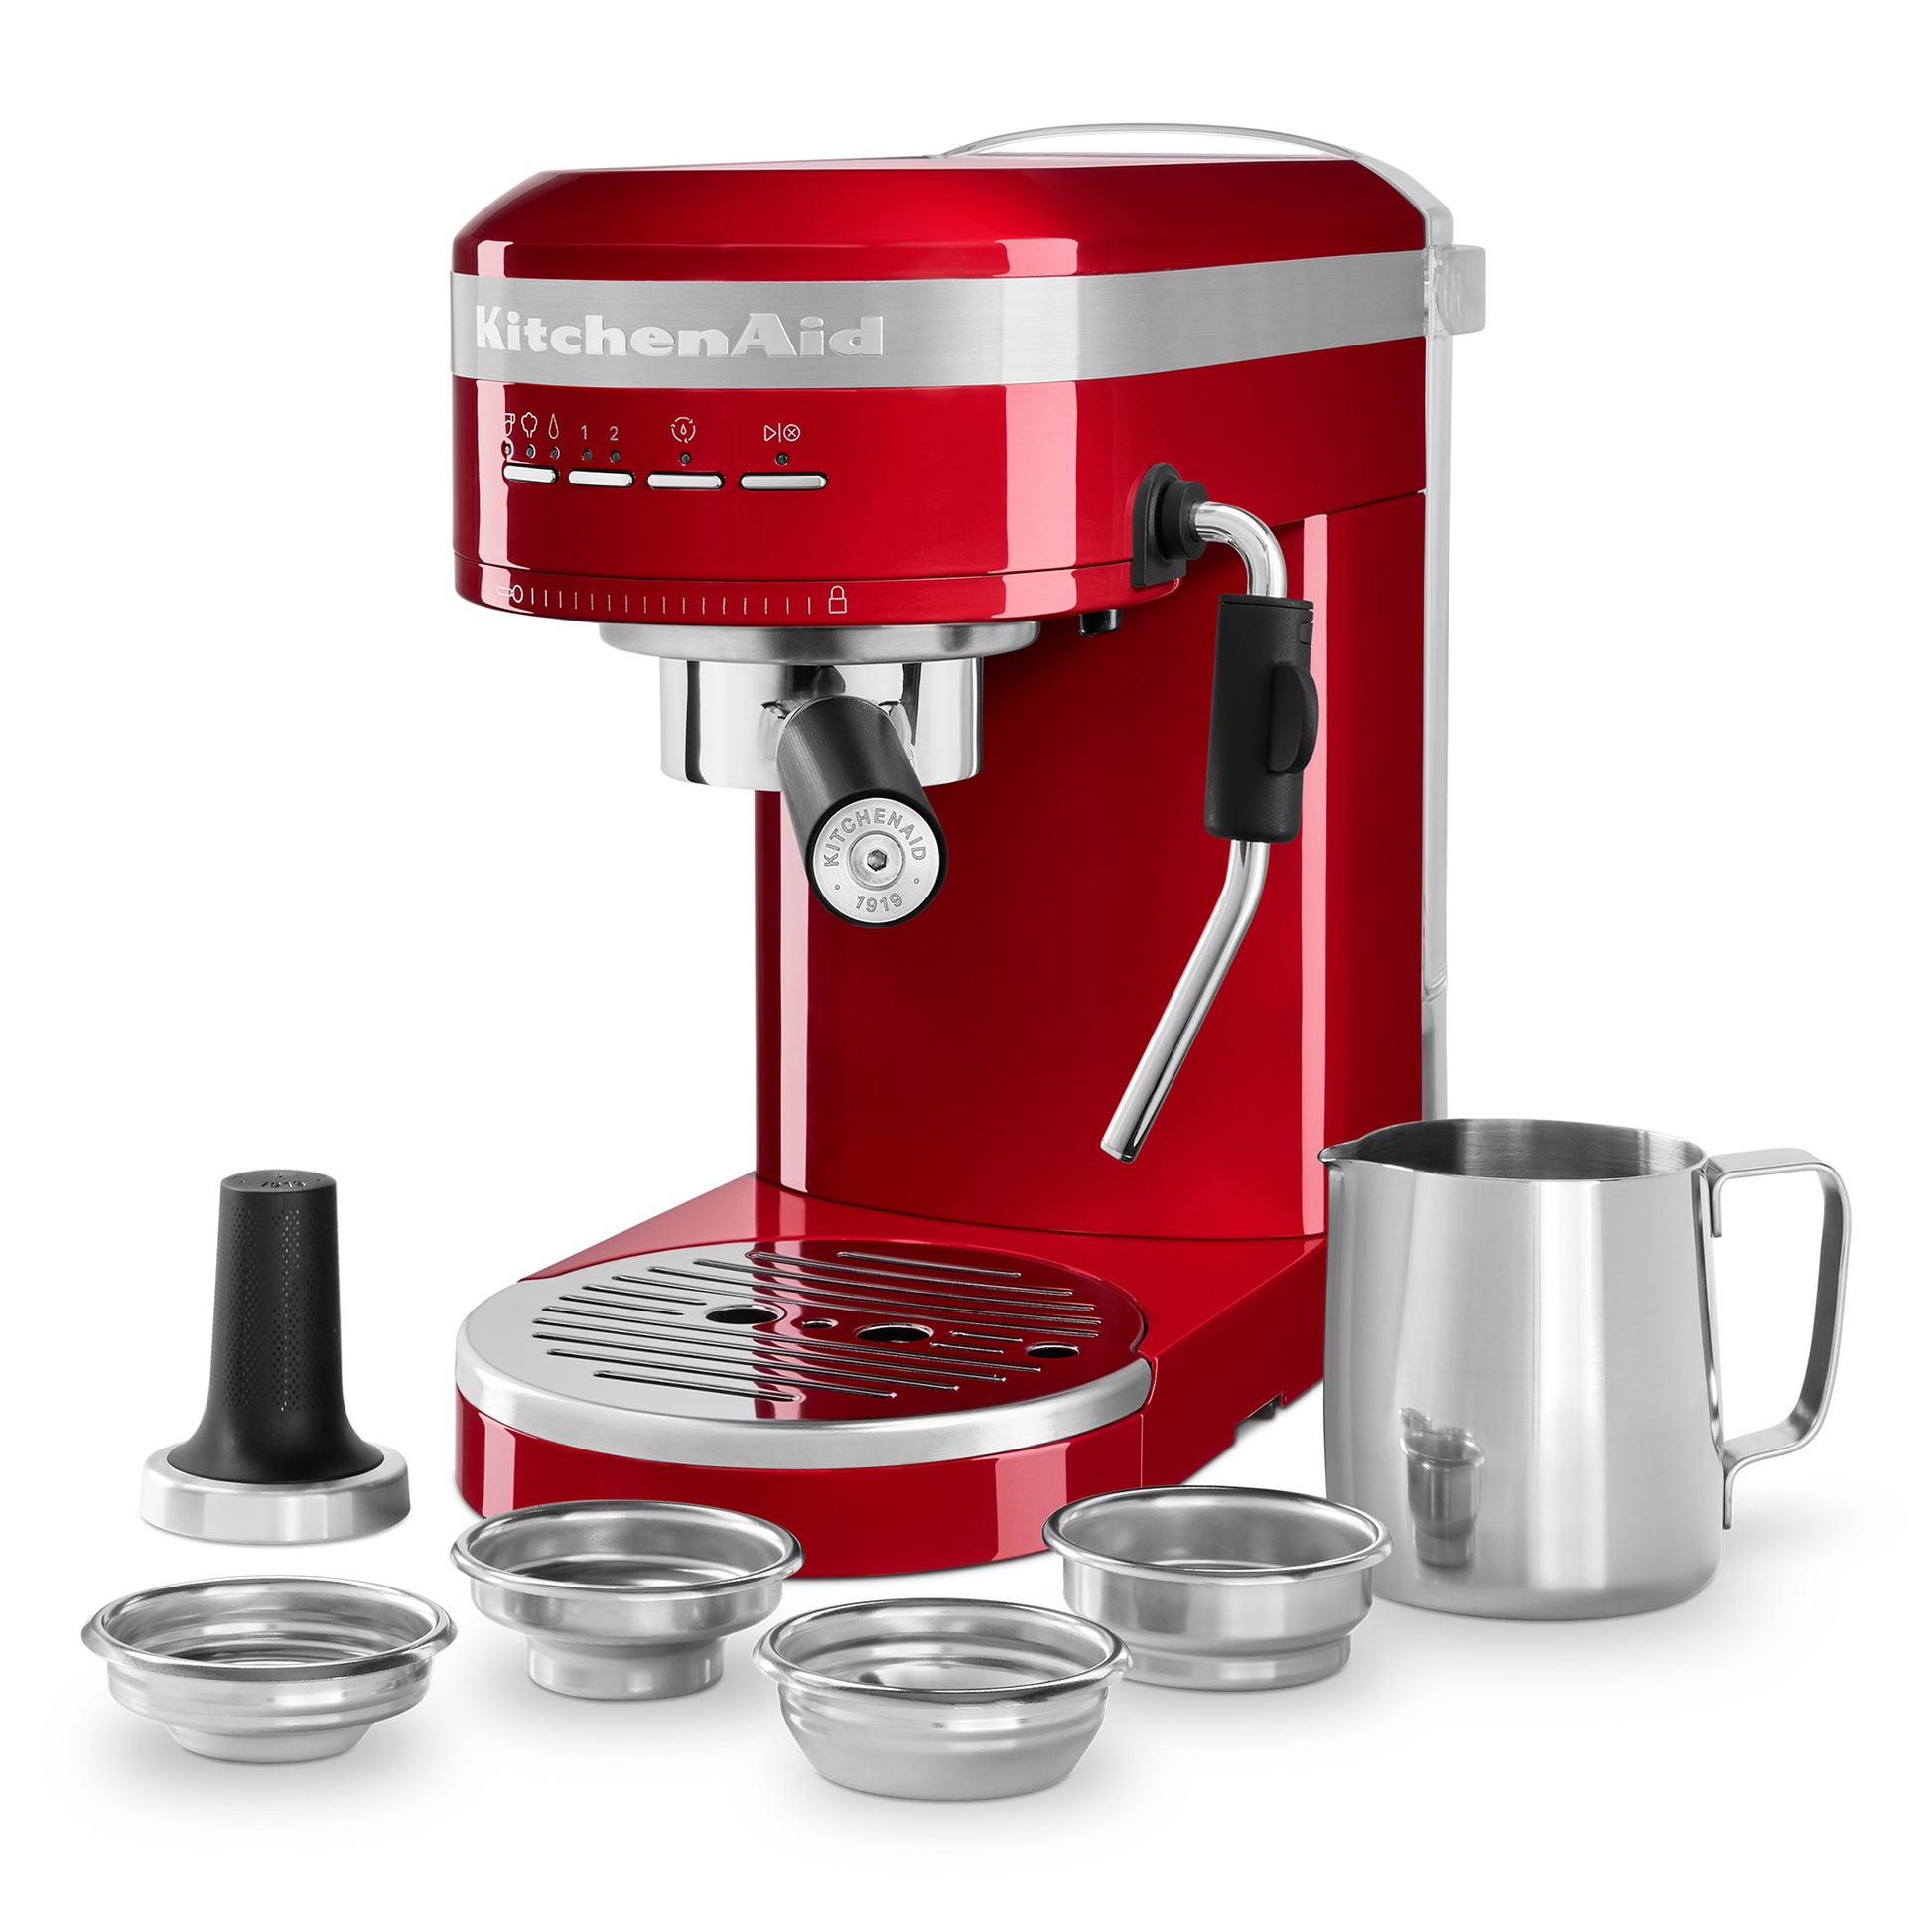 KitchenAid Semi-Automatic Espresso Machine on sale: Save $180 on